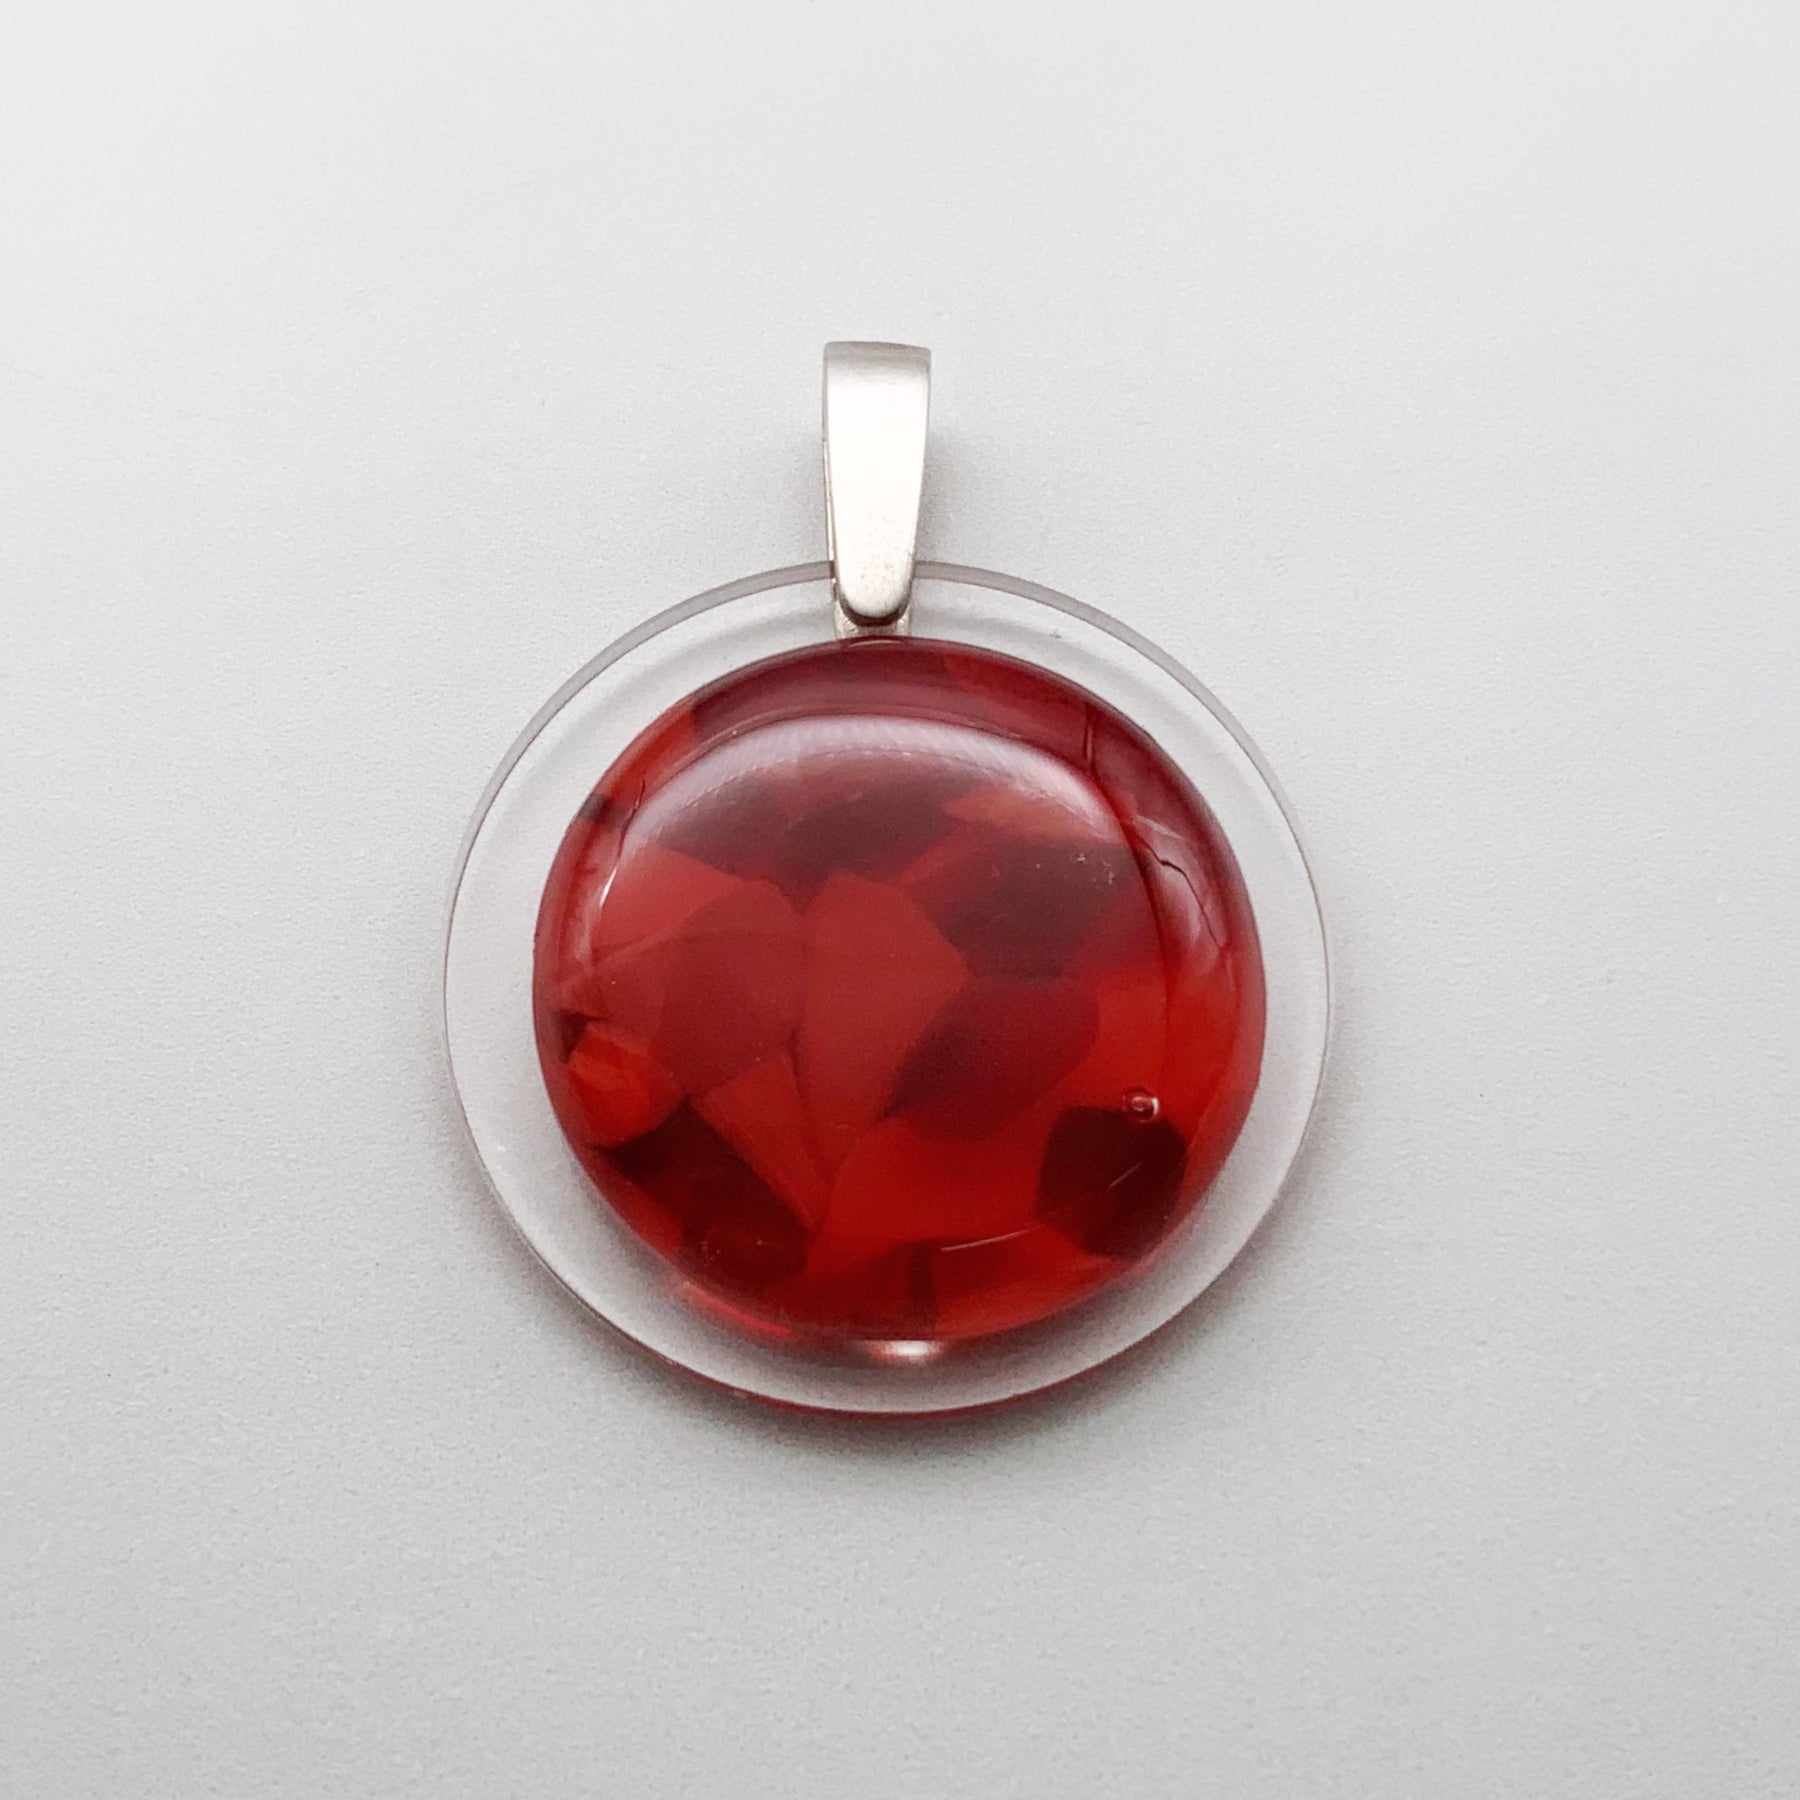 Red Murrini 35mm glass pendant on perspex